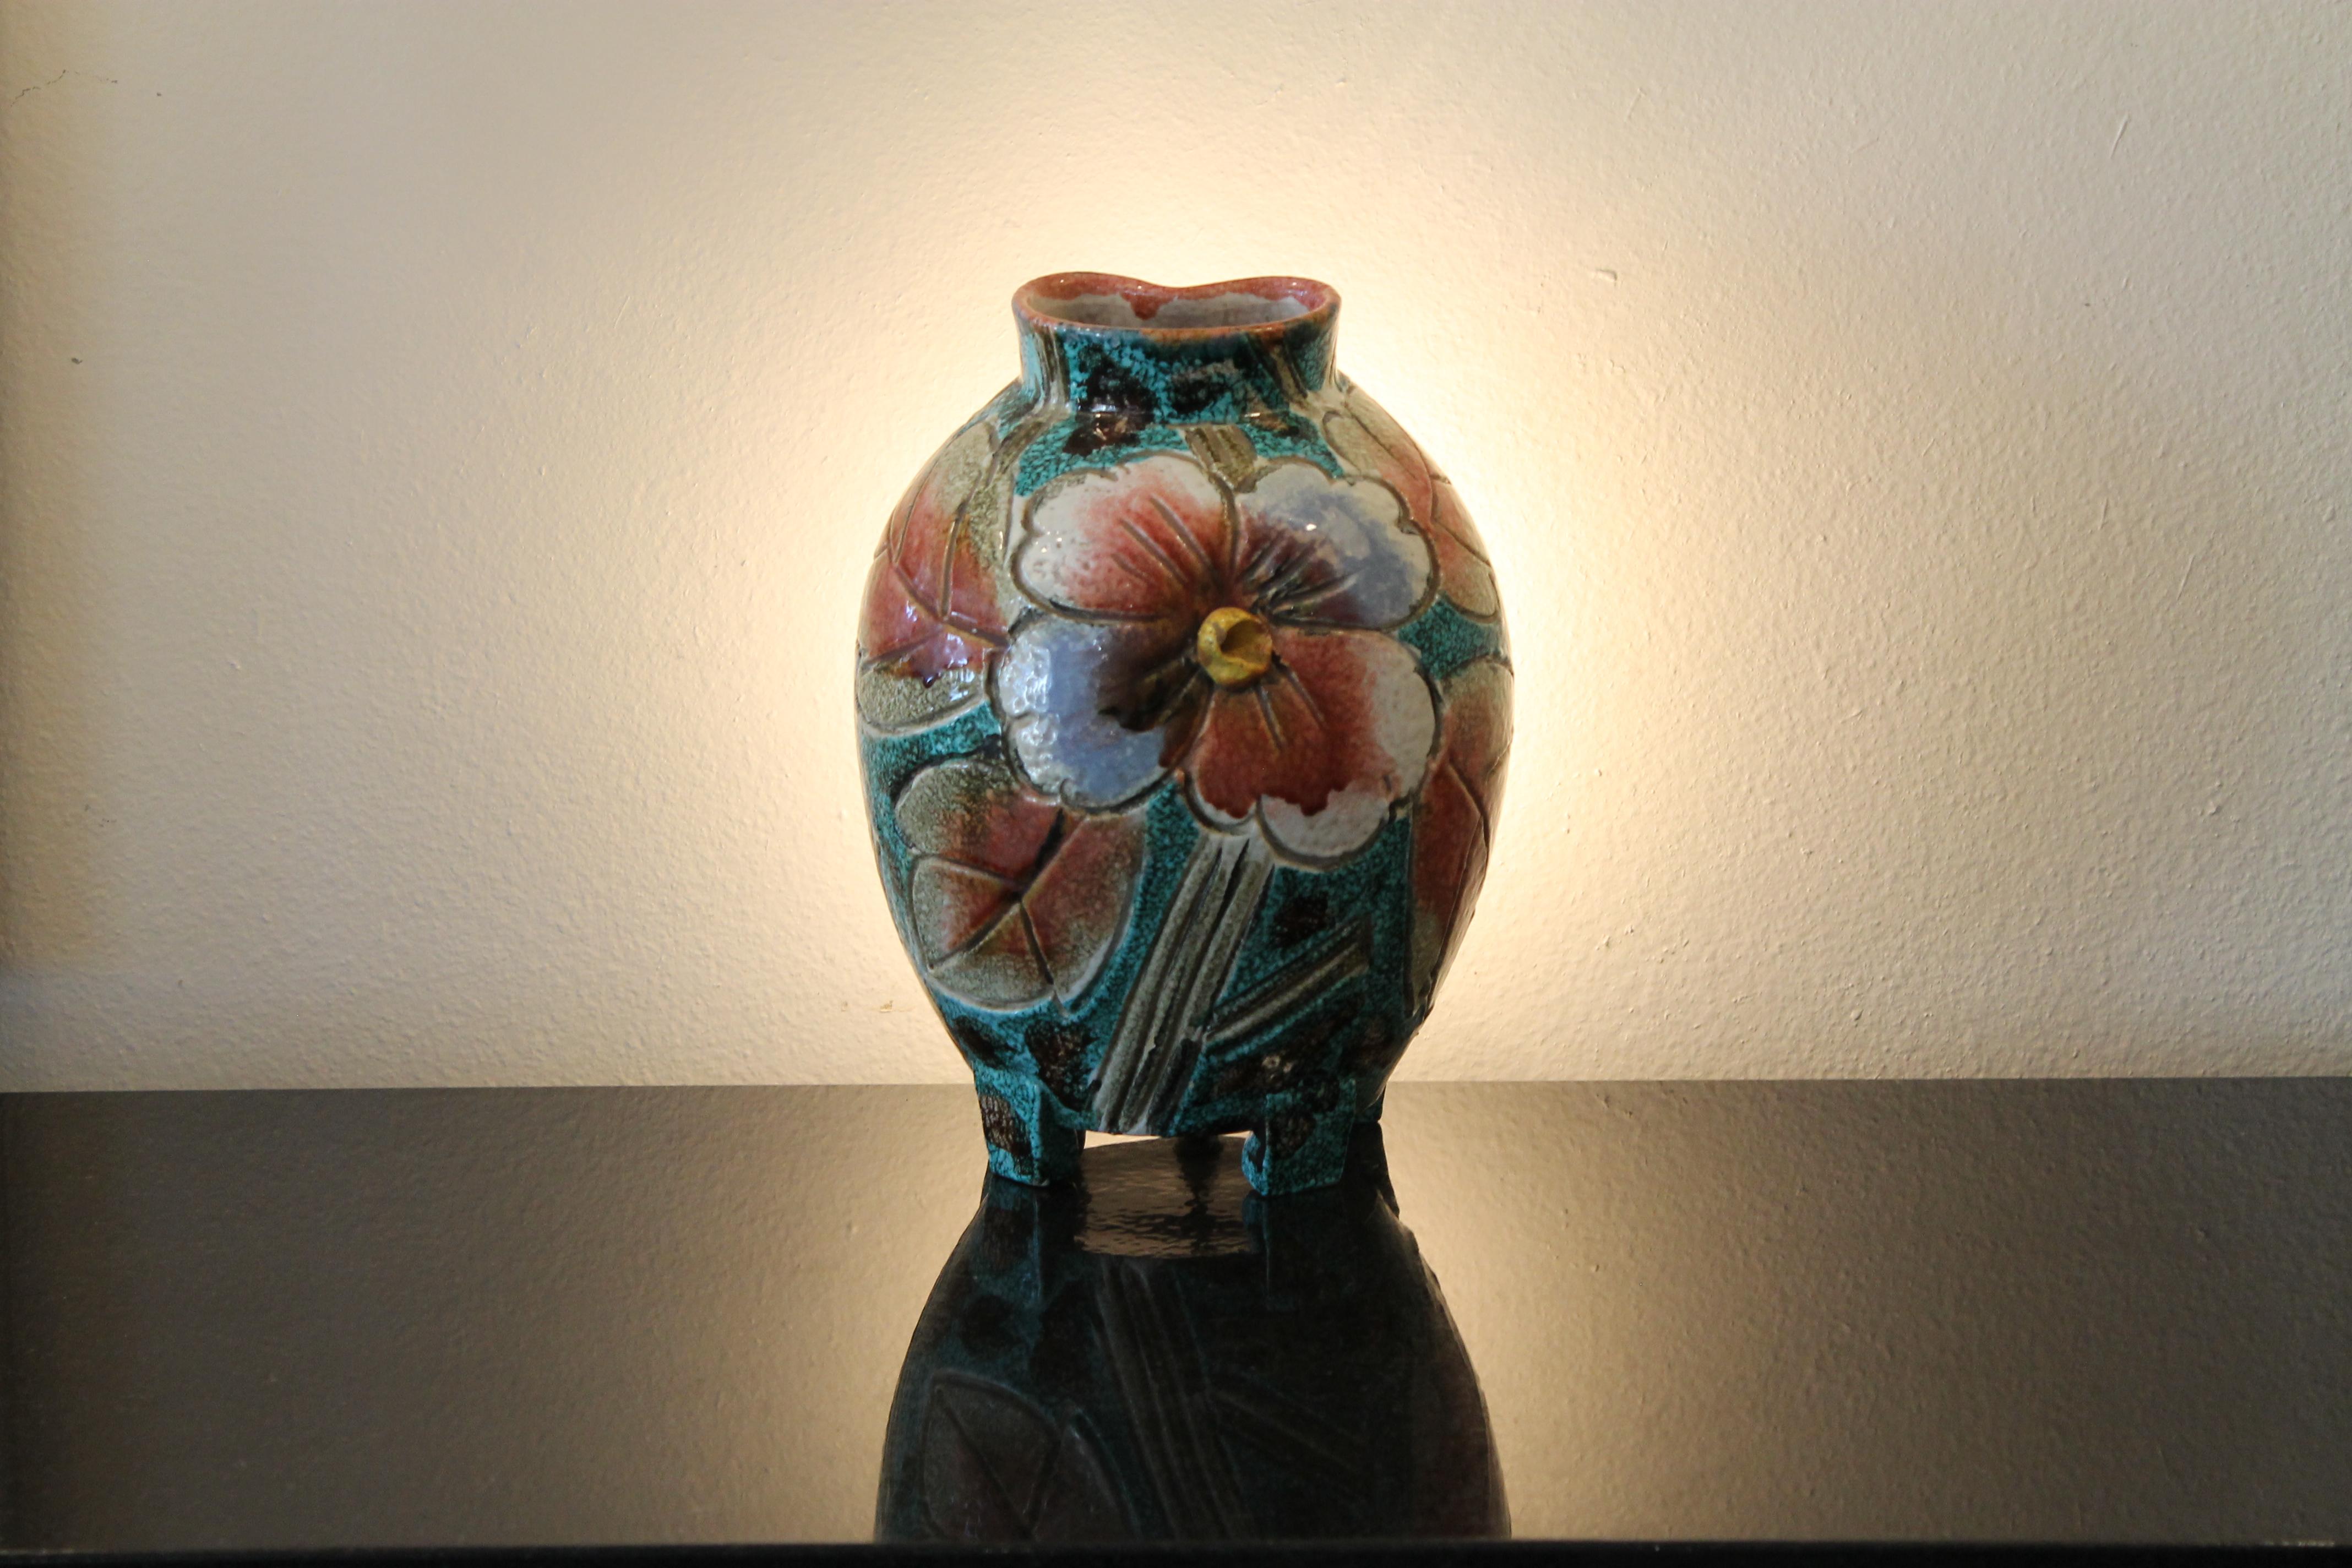 Italian ceramic television lamp with flowers. Lamp measures 8.5